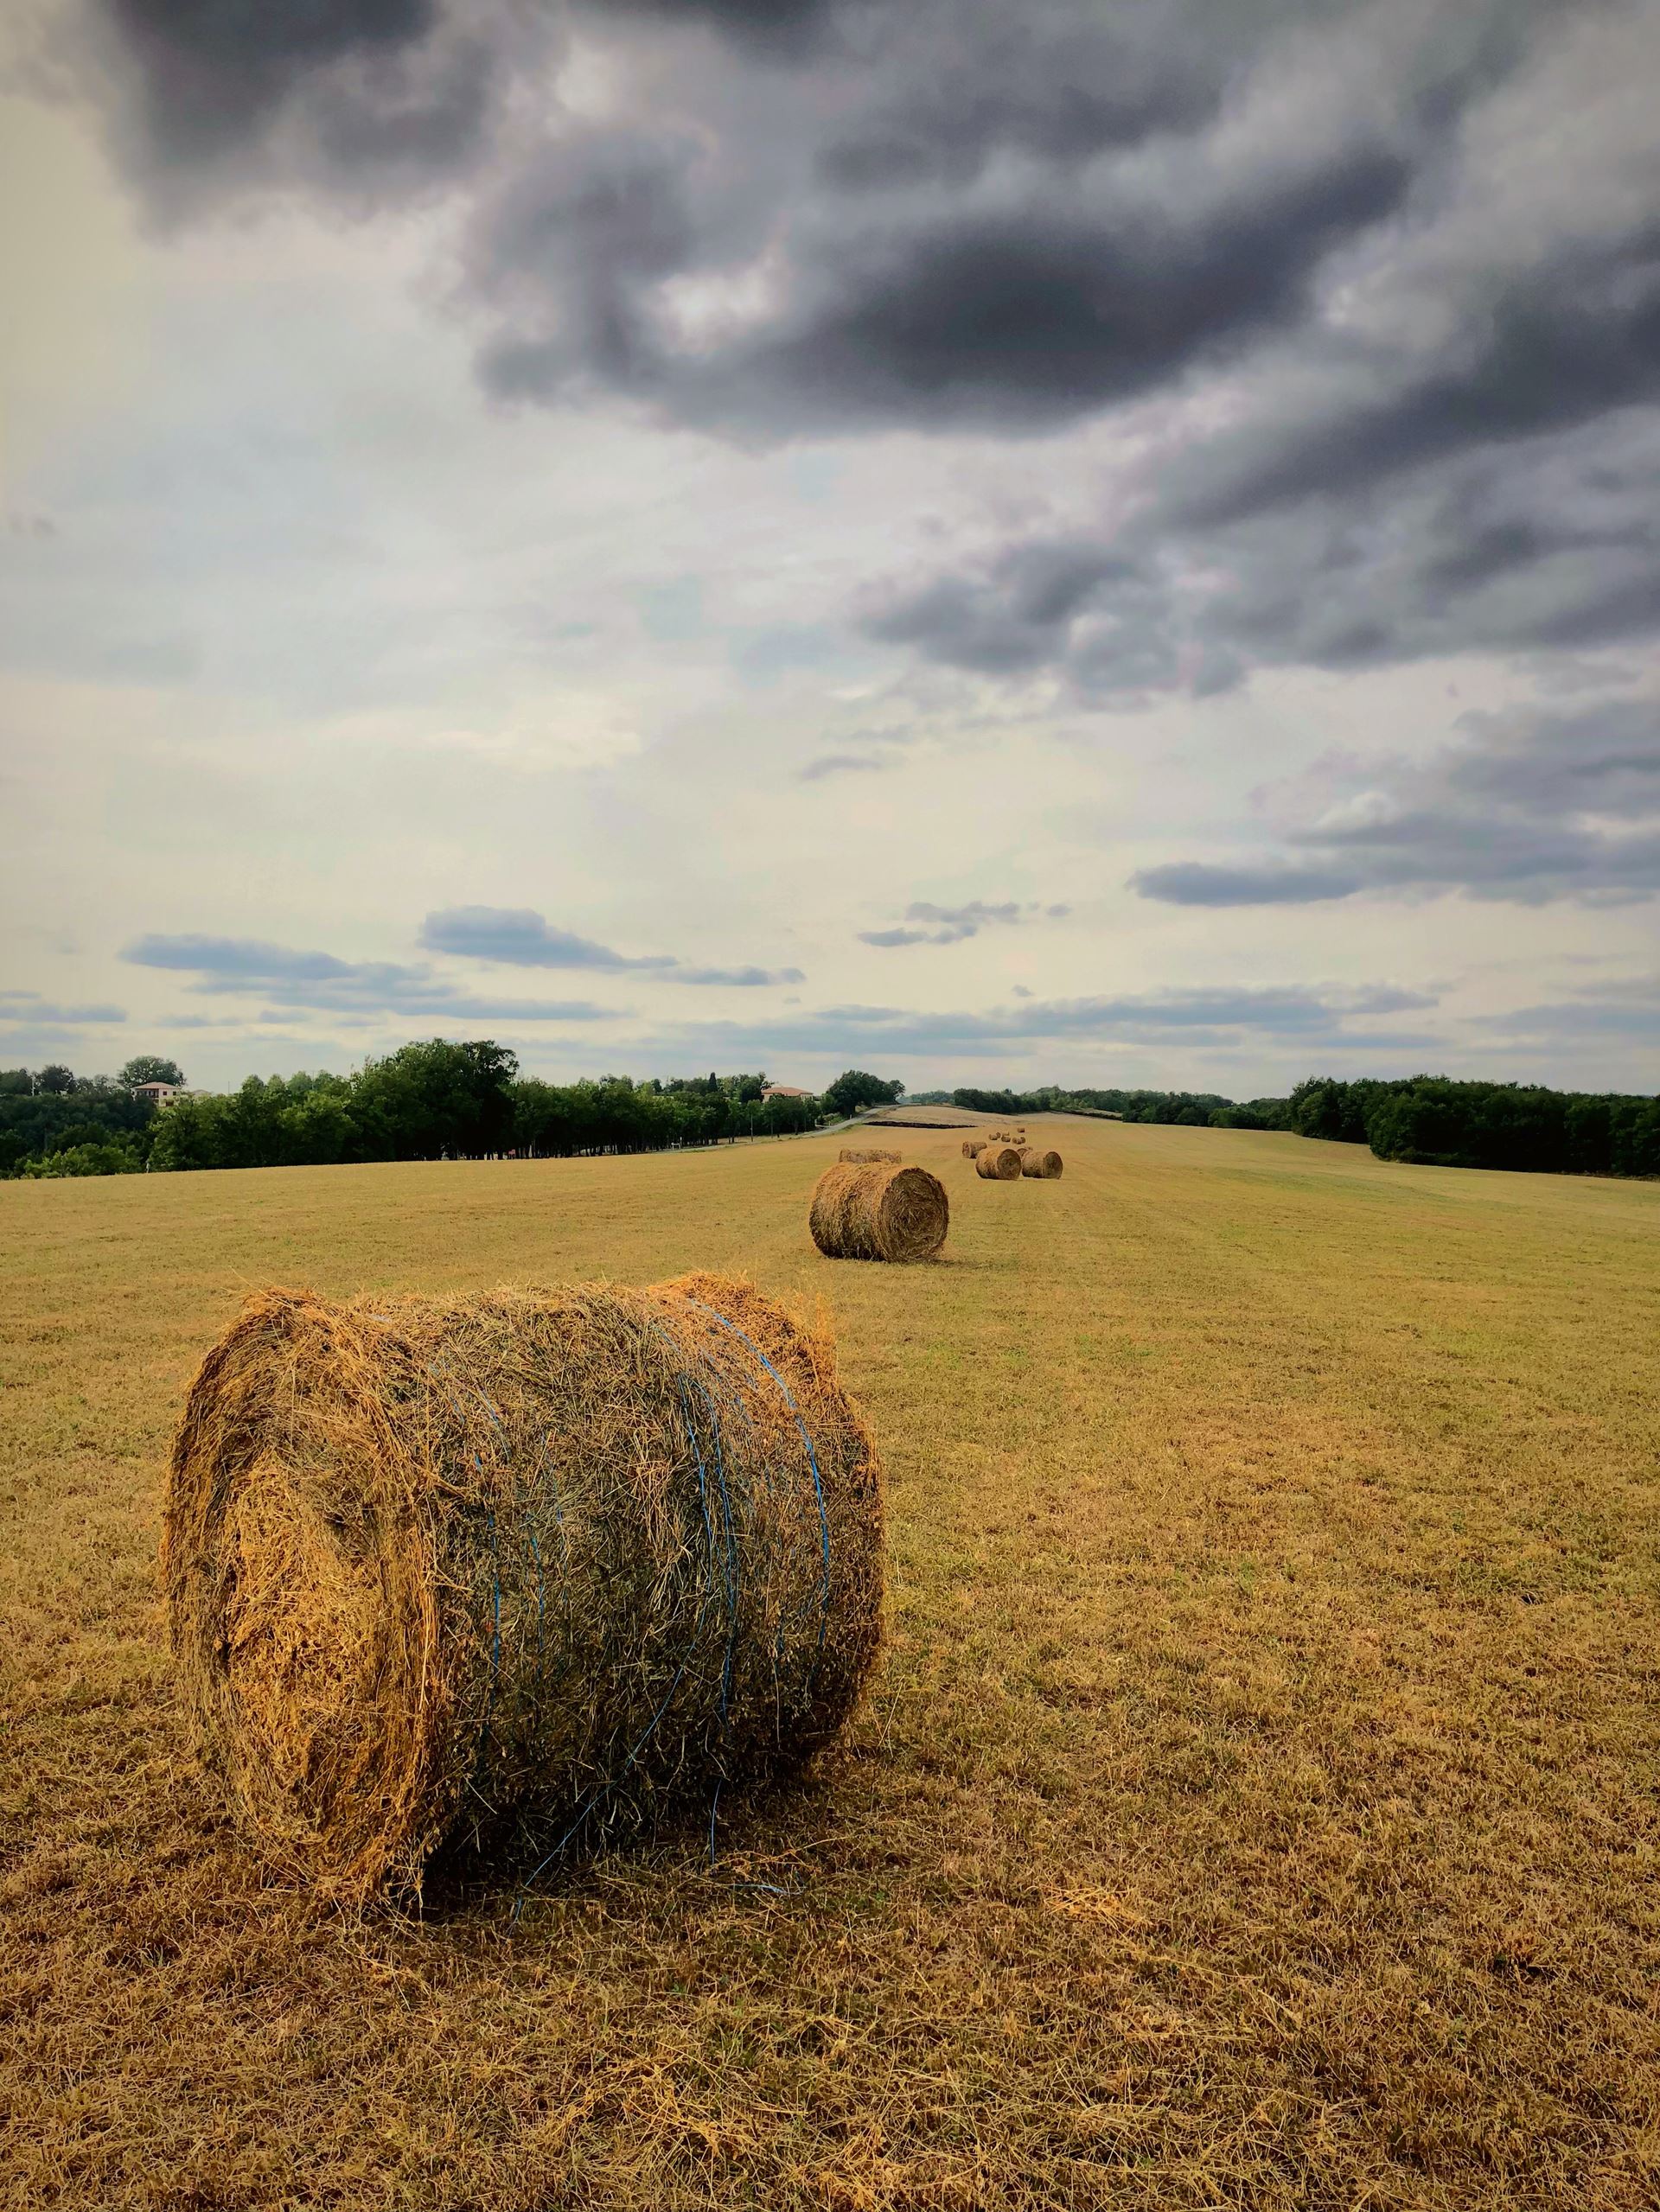 haybales in a field 